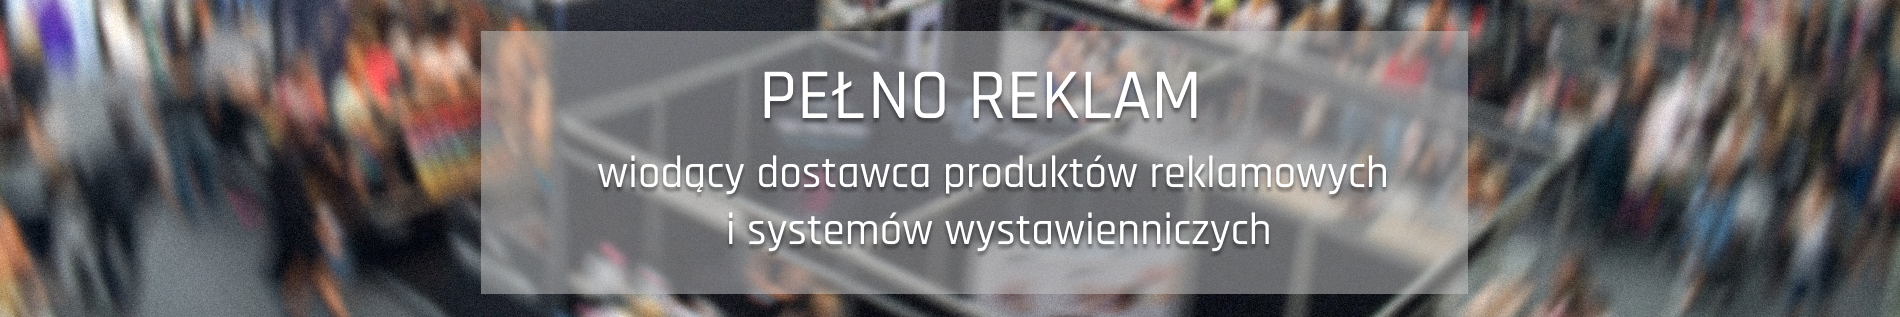 sklep reklamowy pelnoreklam.pl